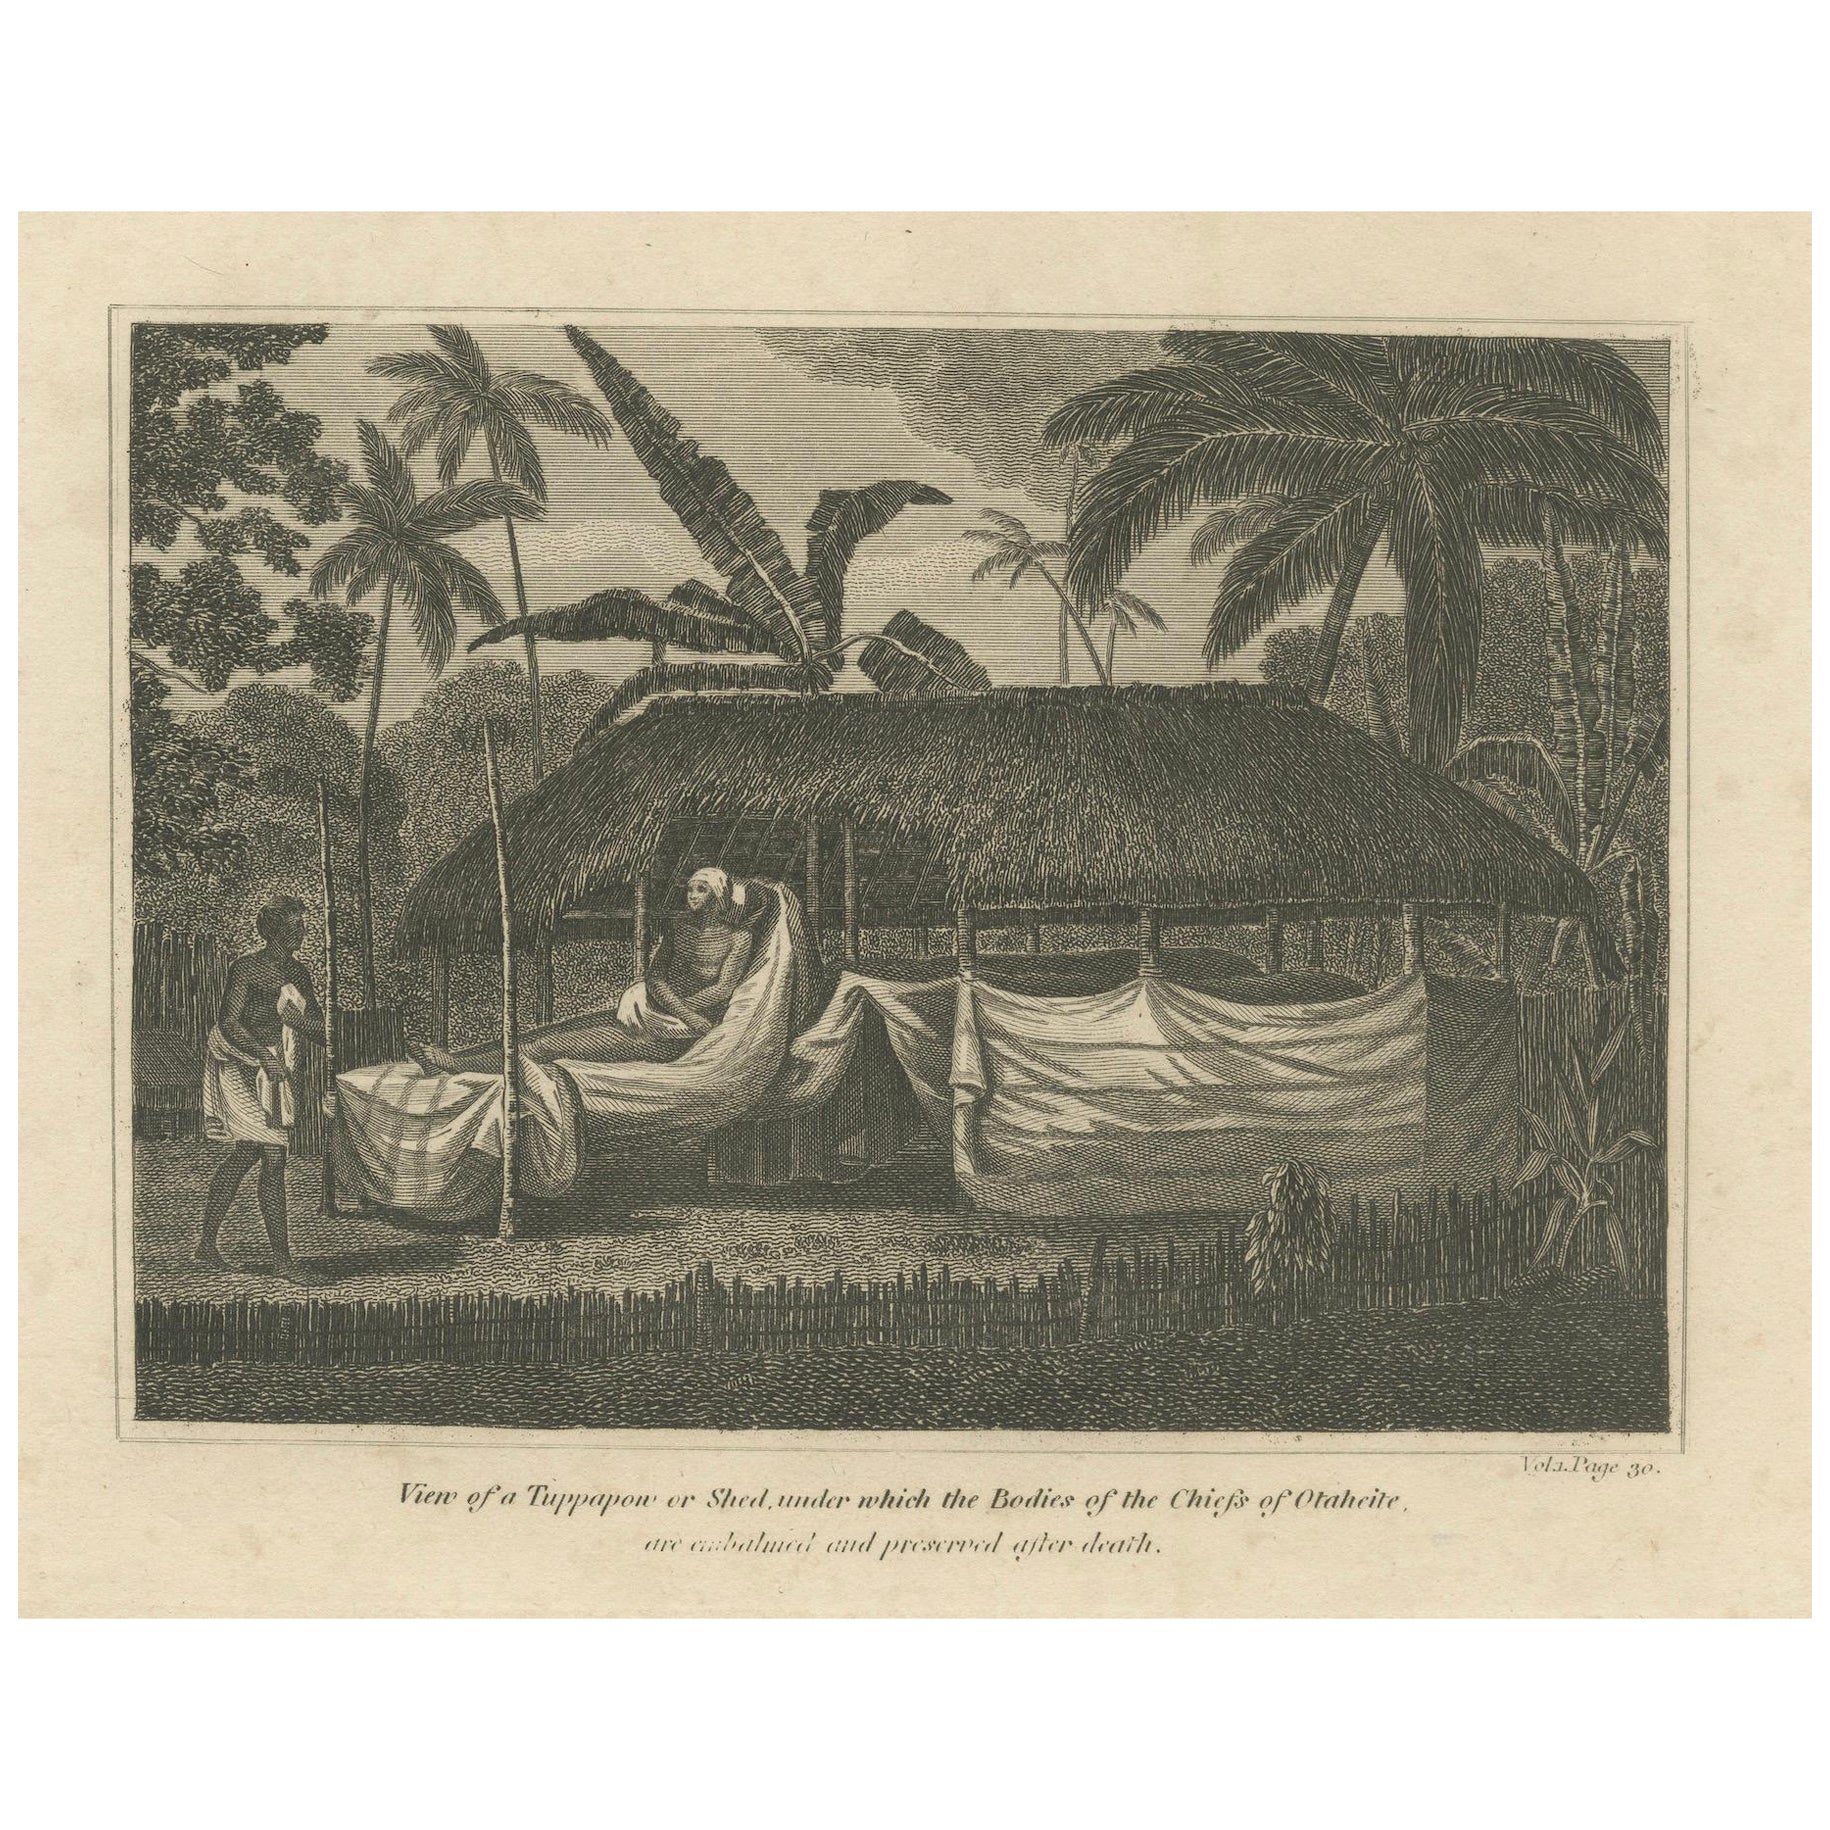 Tee's Eternal Rest: The Embalmed Chief of Otaheite or Tahiti, circa 1800